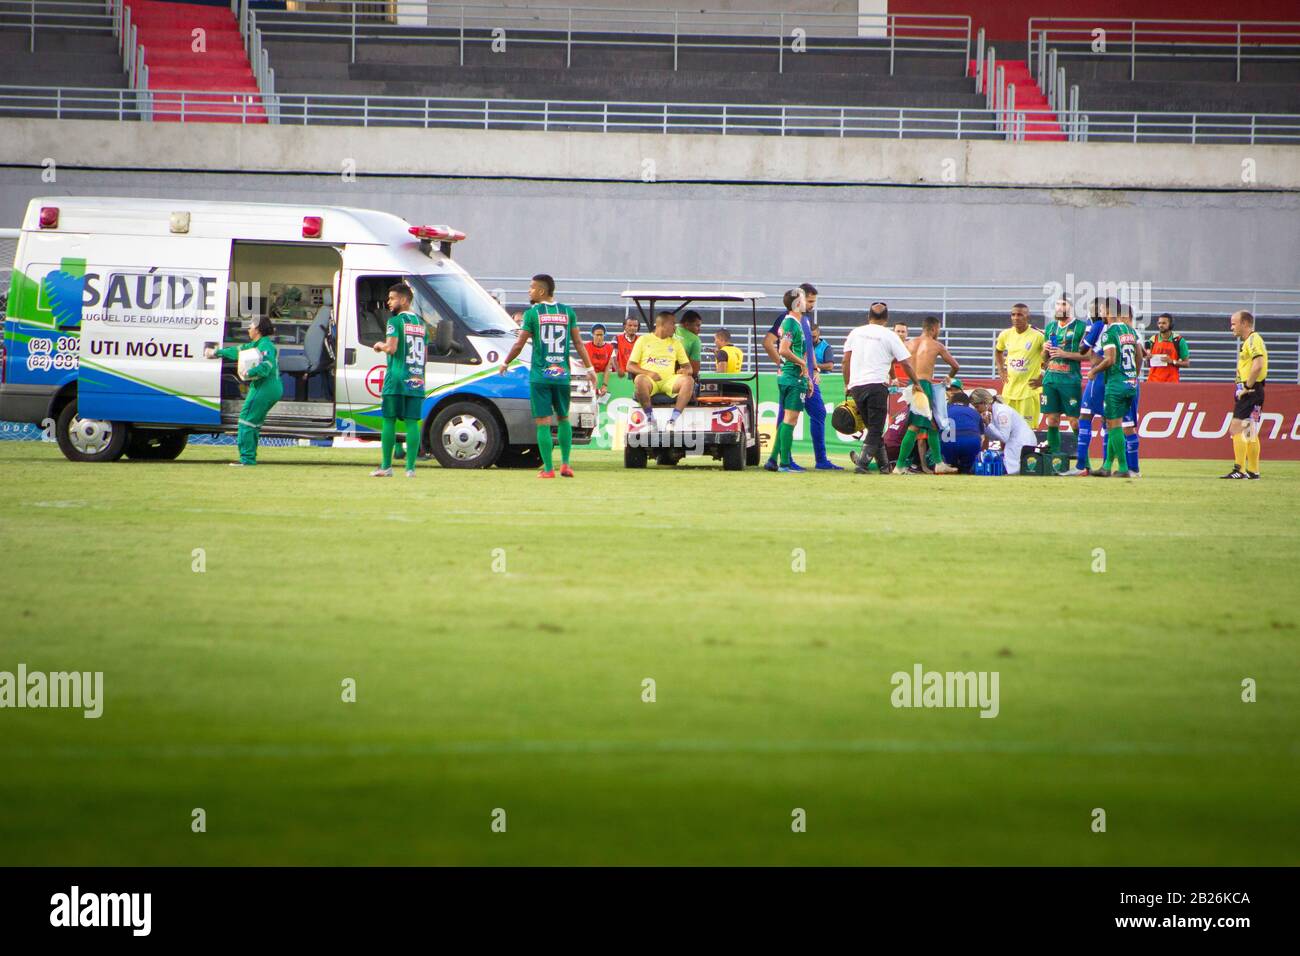 MACEI', AL - 29.02.2020: CSA X CORURIPE - Ambulance enters Campo to rescue the player Palinha during Csa x Coruripe held at Estádio Rei Pelé in Maceió, AL. (Photo: Renato Alexandre/Fotoarena) Stock Photo